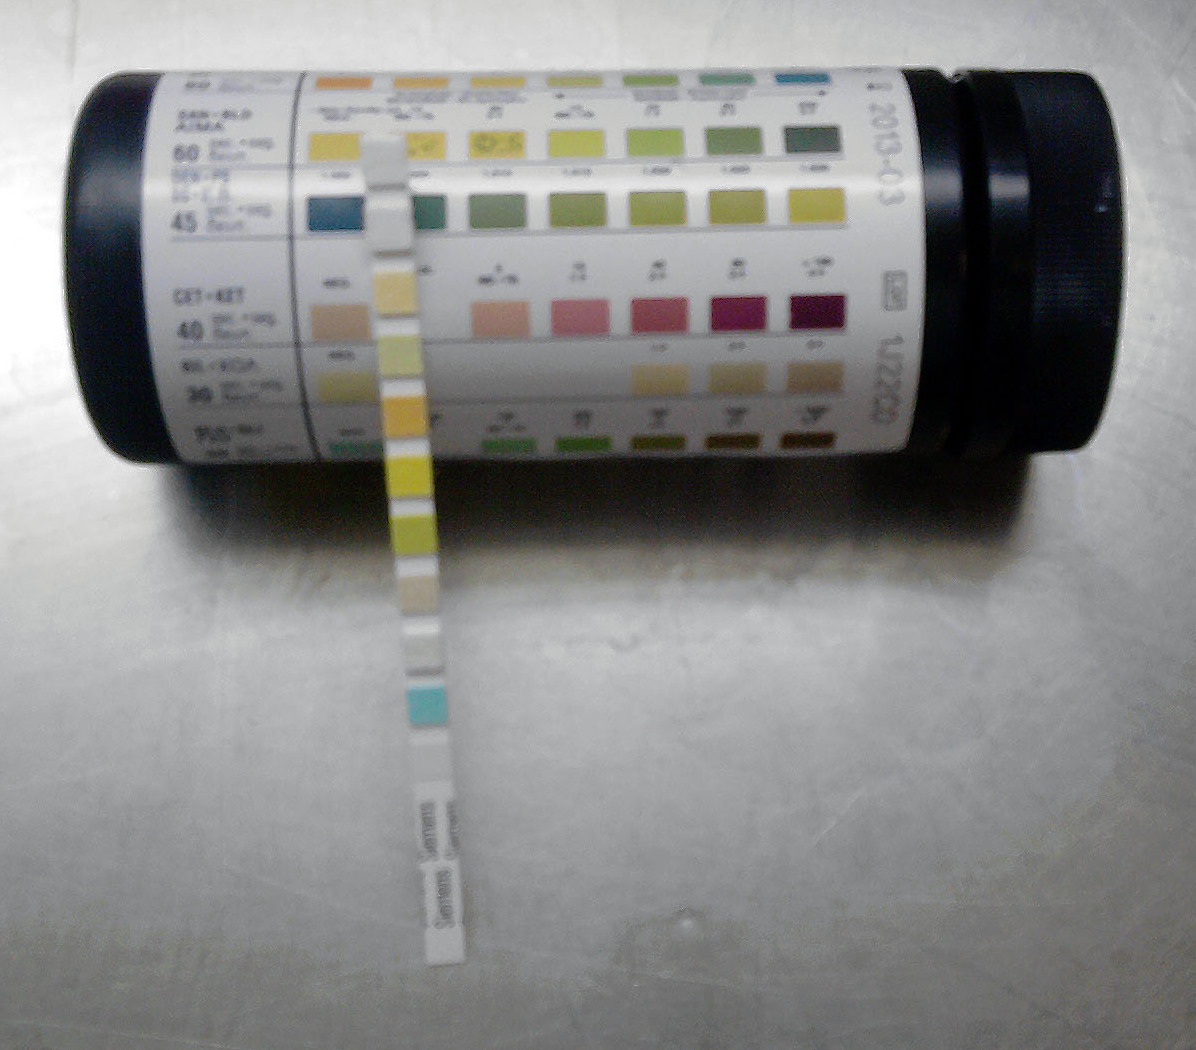 Urine sample test strip